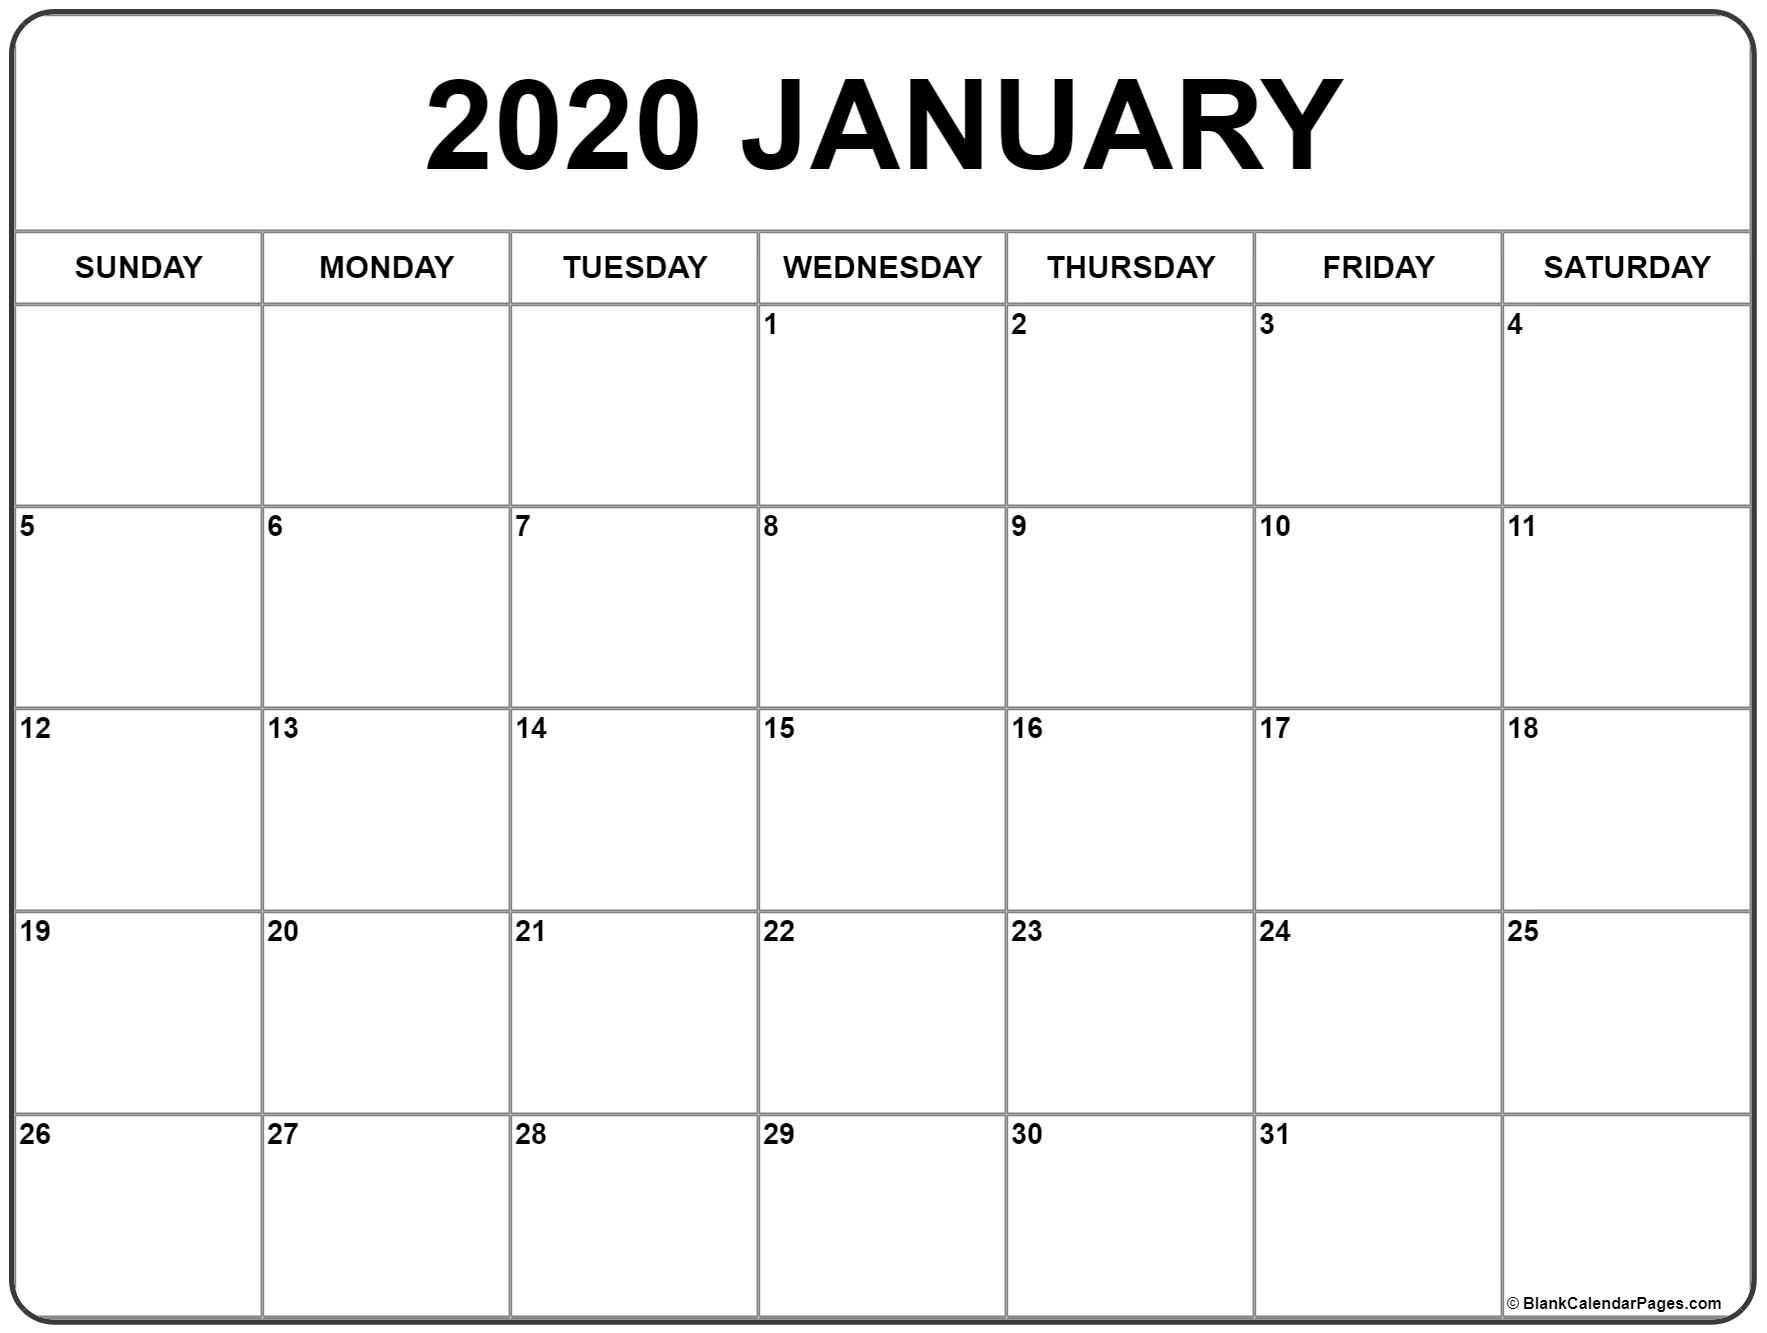 January 2020 Calendar | Free Printable Monthly Calendars-2020 January February Calendar